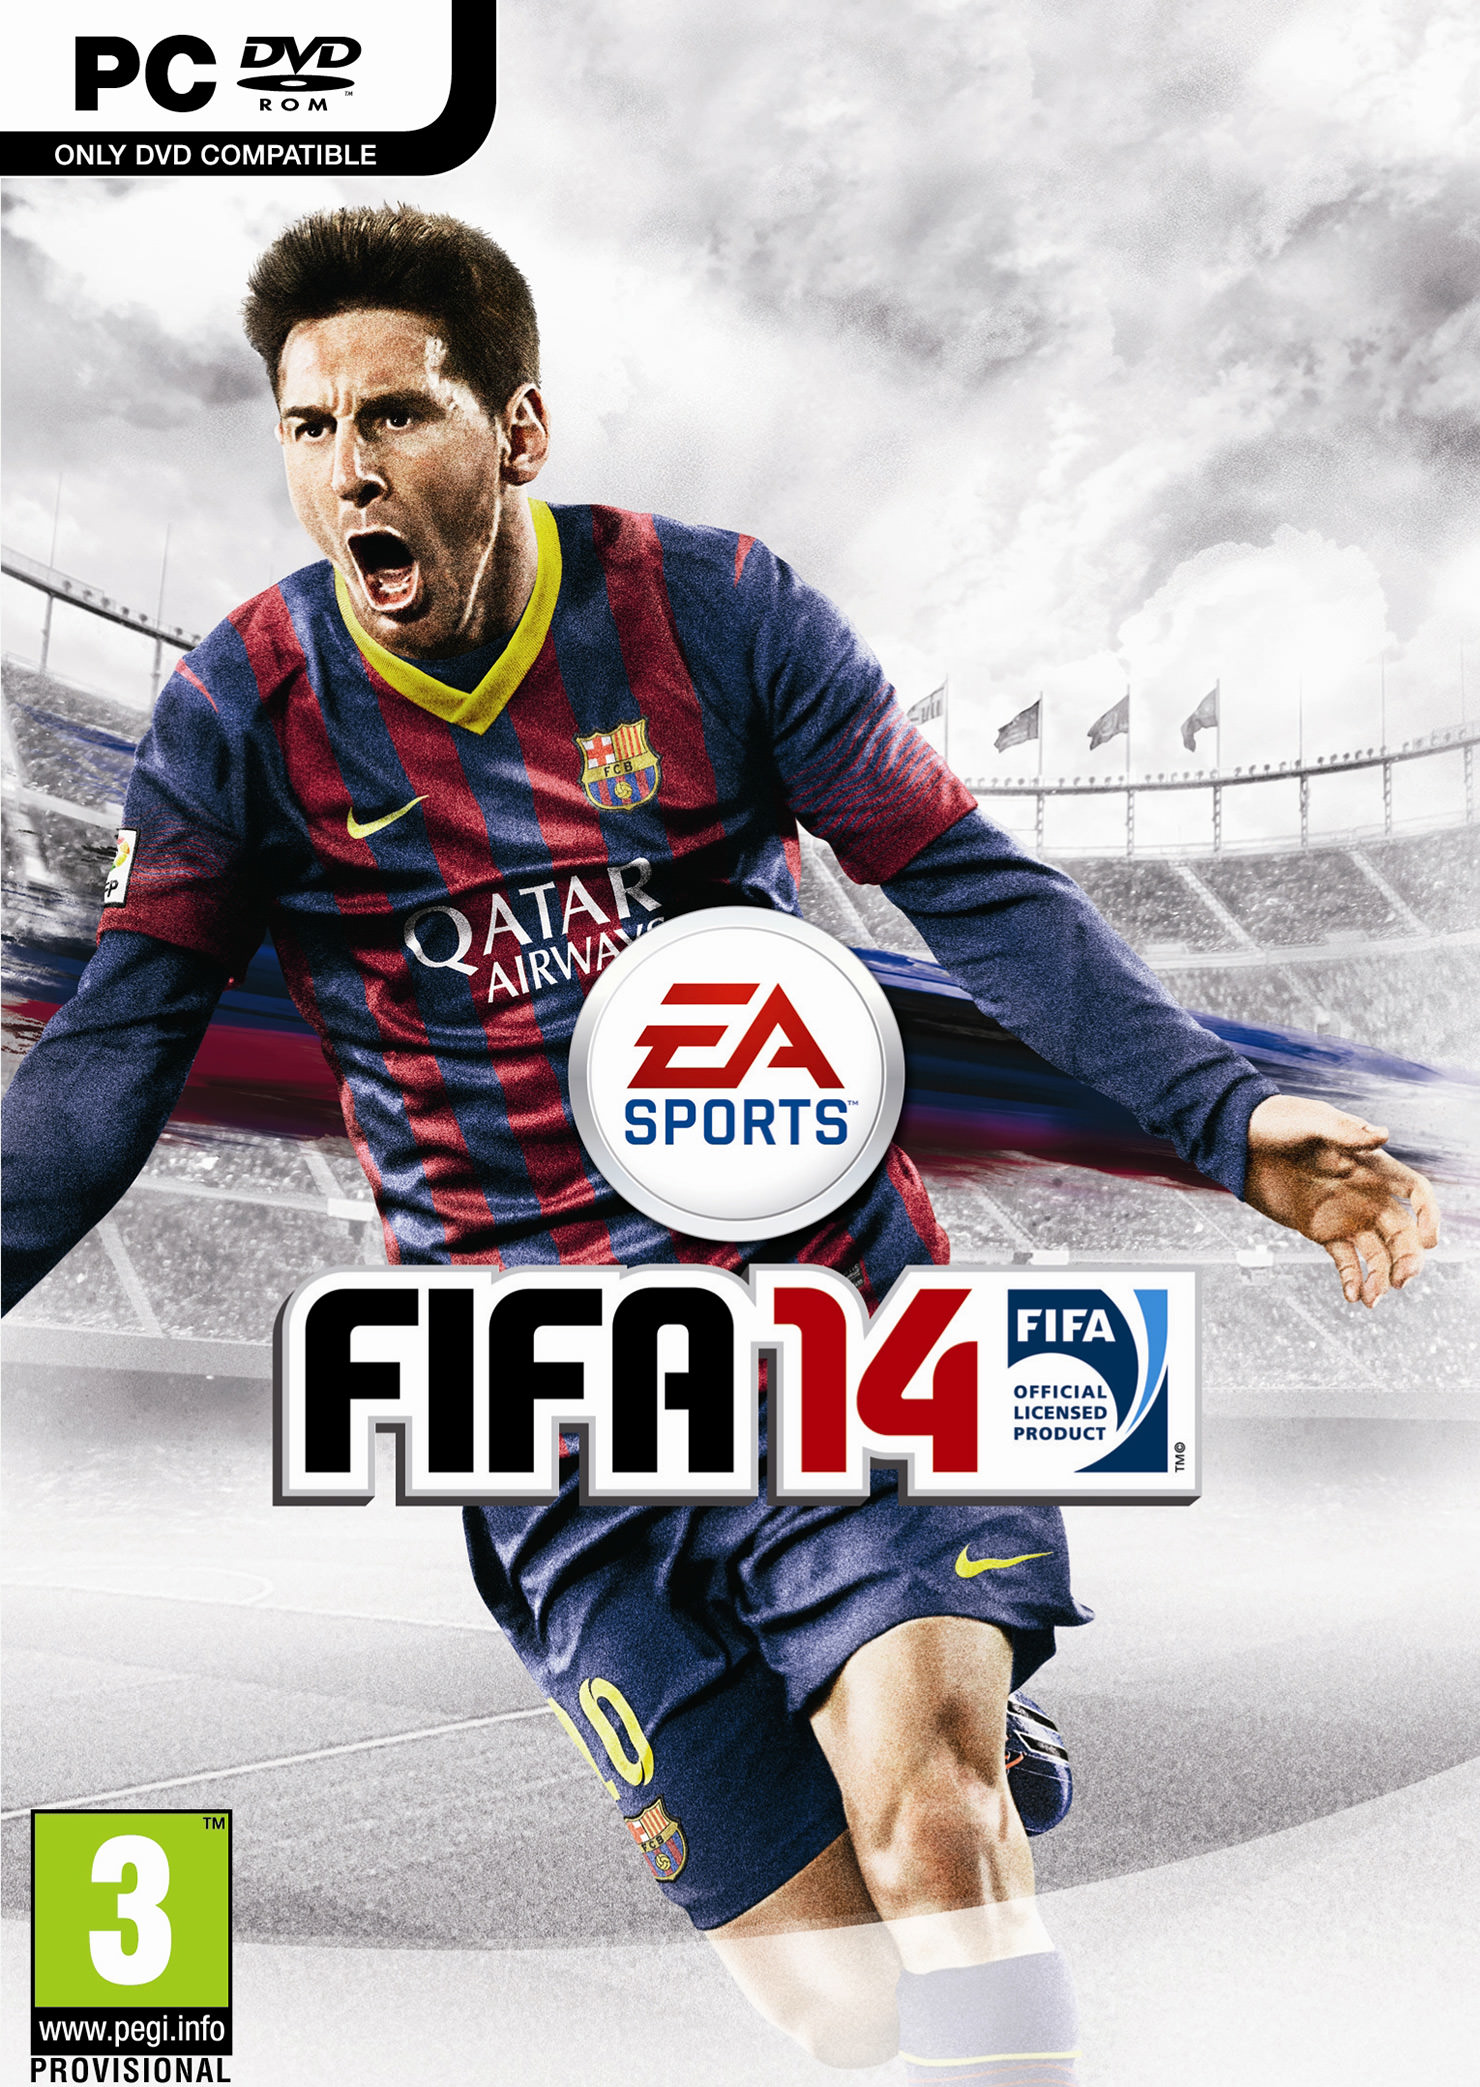 FIFA 14 Ultimate Edition Full Crack